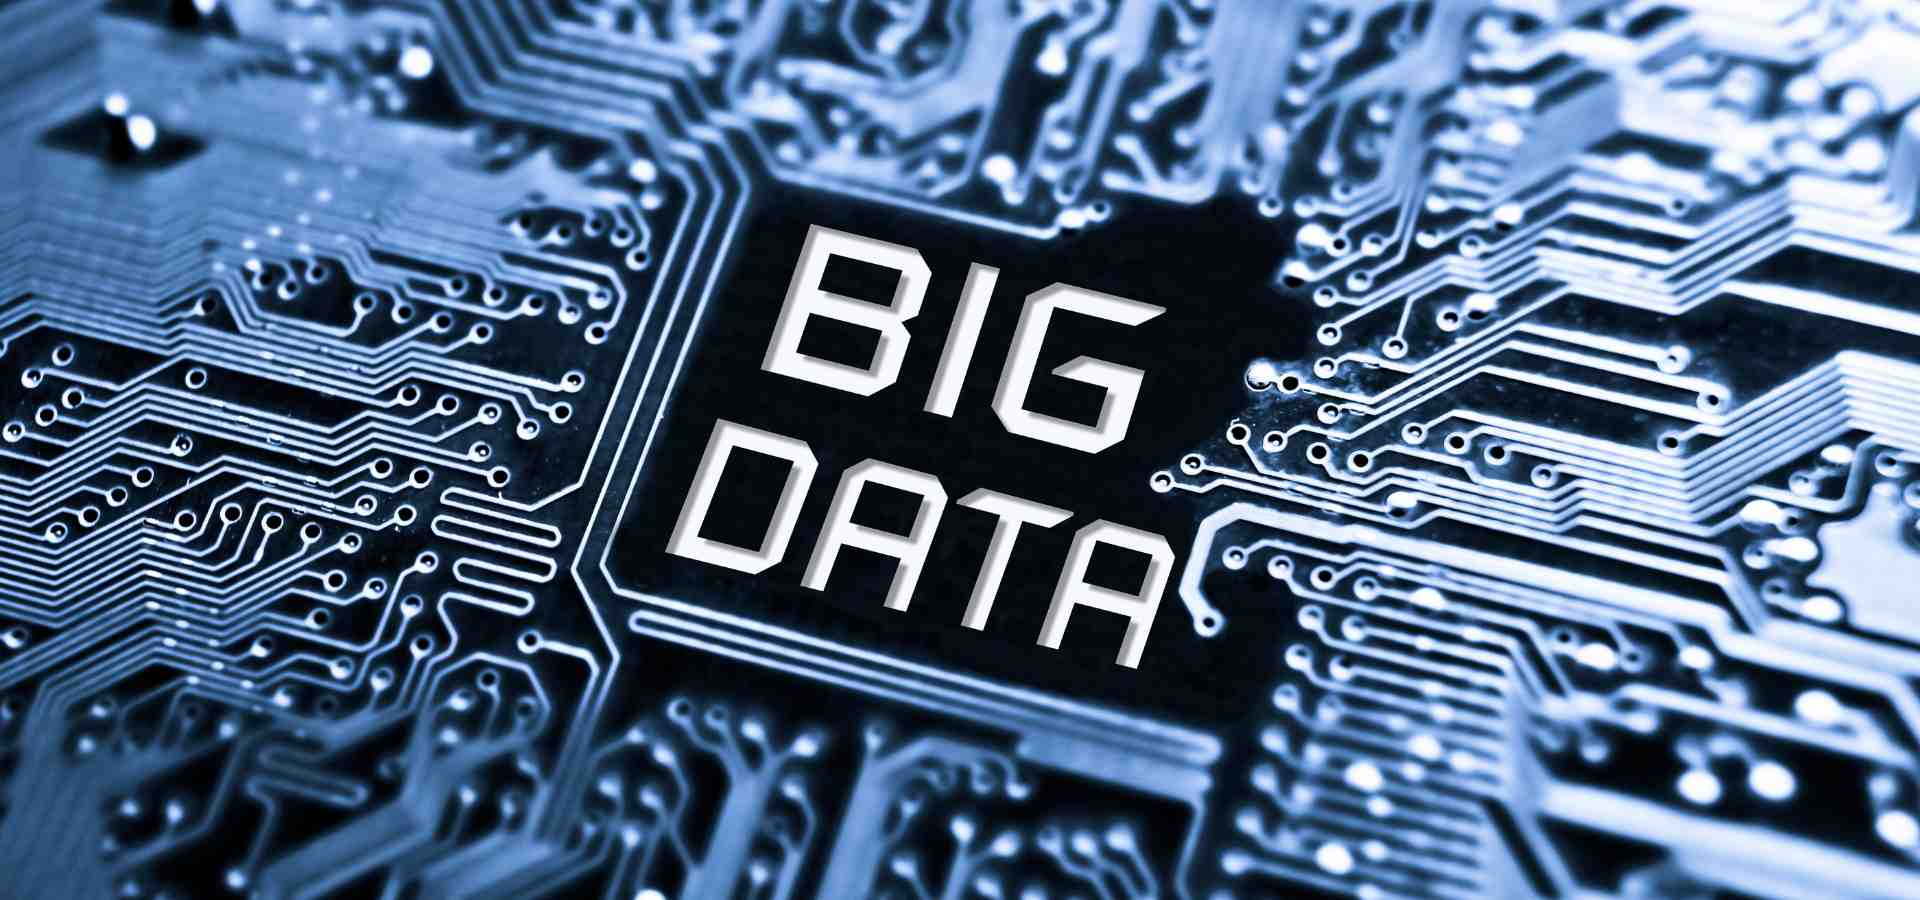 Big data in banking